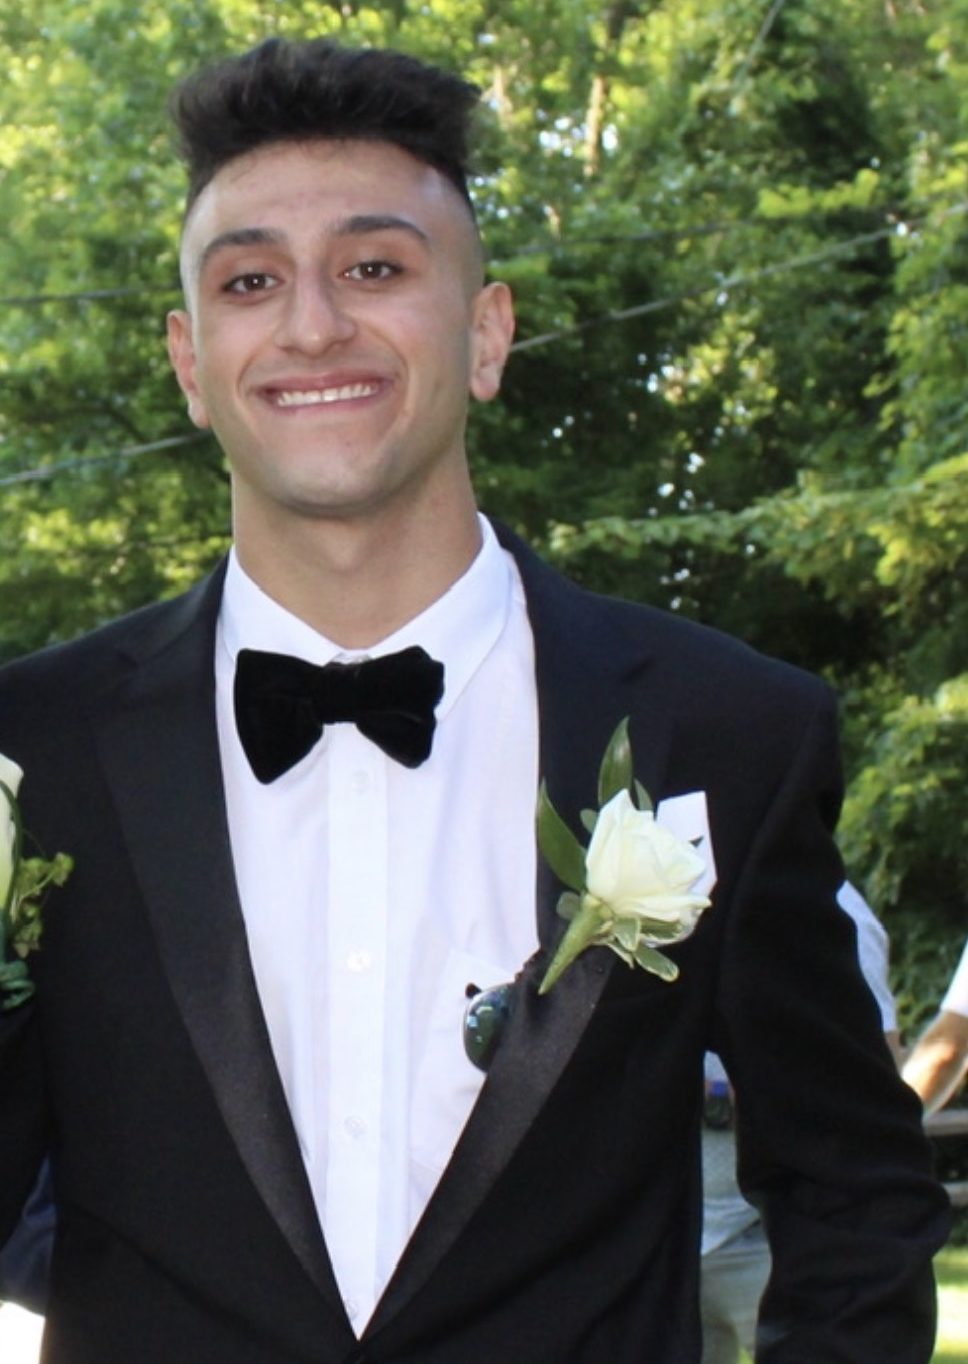 Aaron Souferi, NYU First Class participant, smiling in a tuxedo.